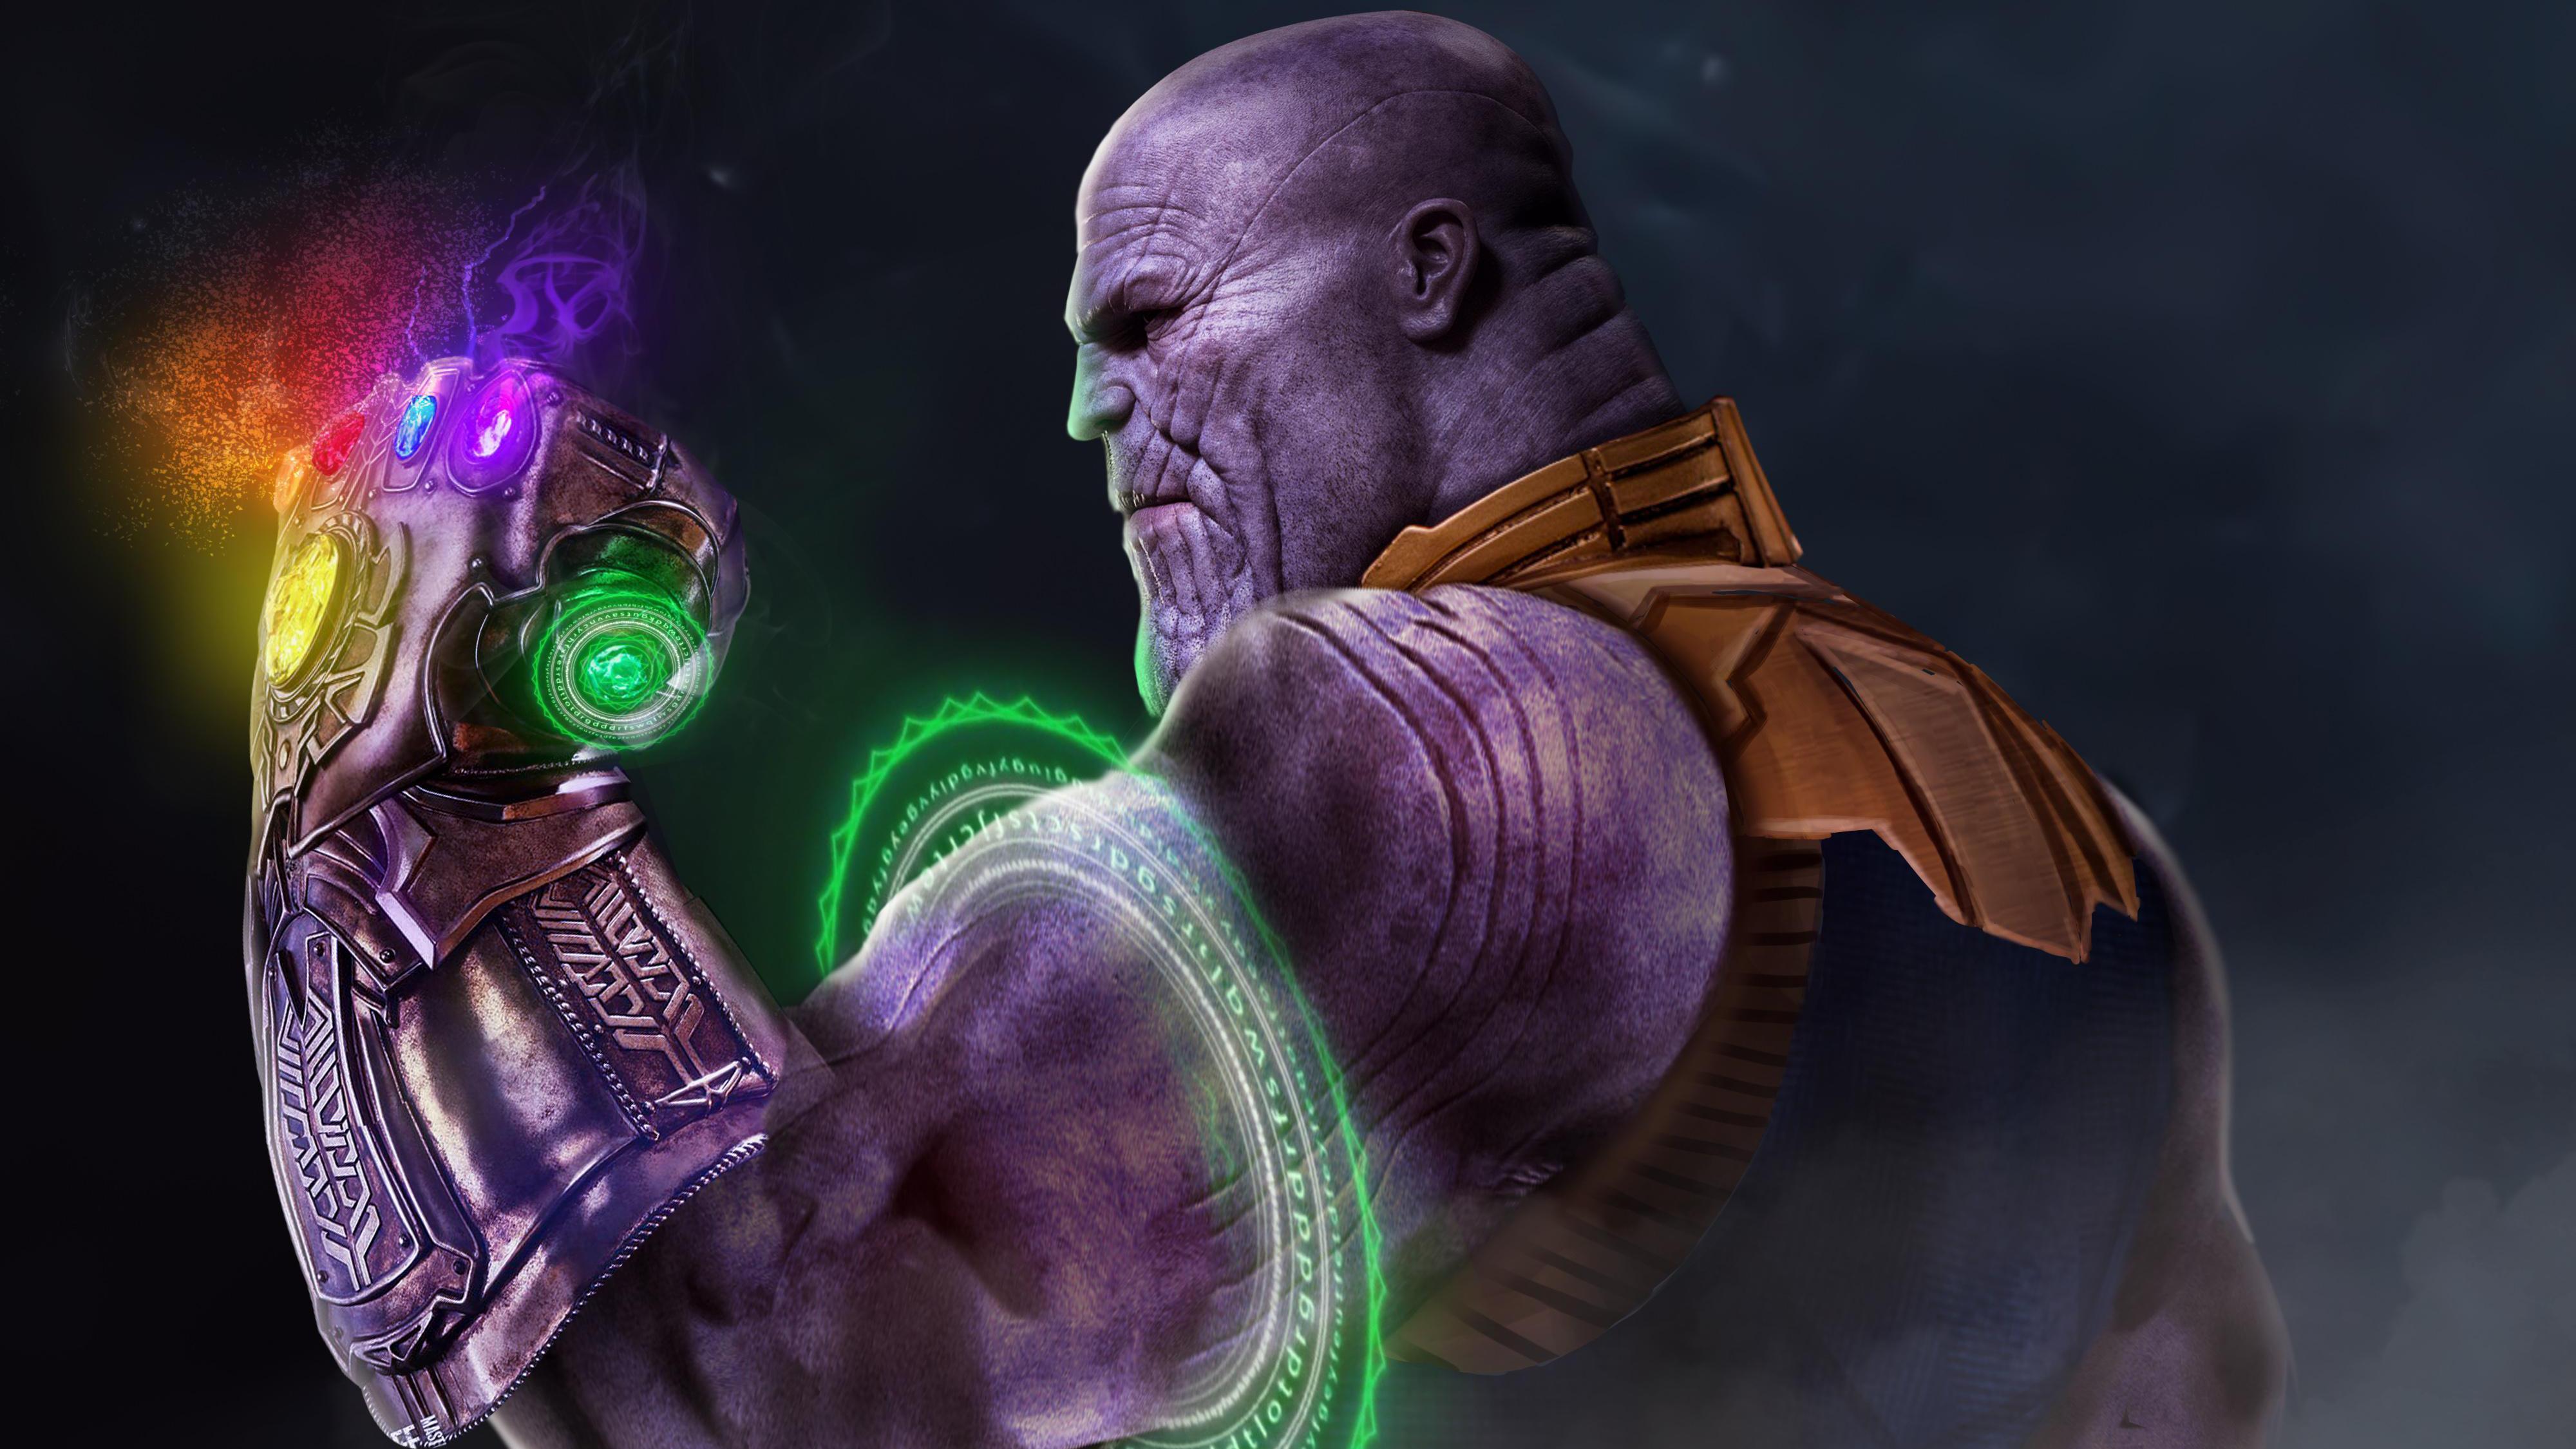 Thanos with Infinity Gauntlet 4K Wallpaper. HD Wallpaper